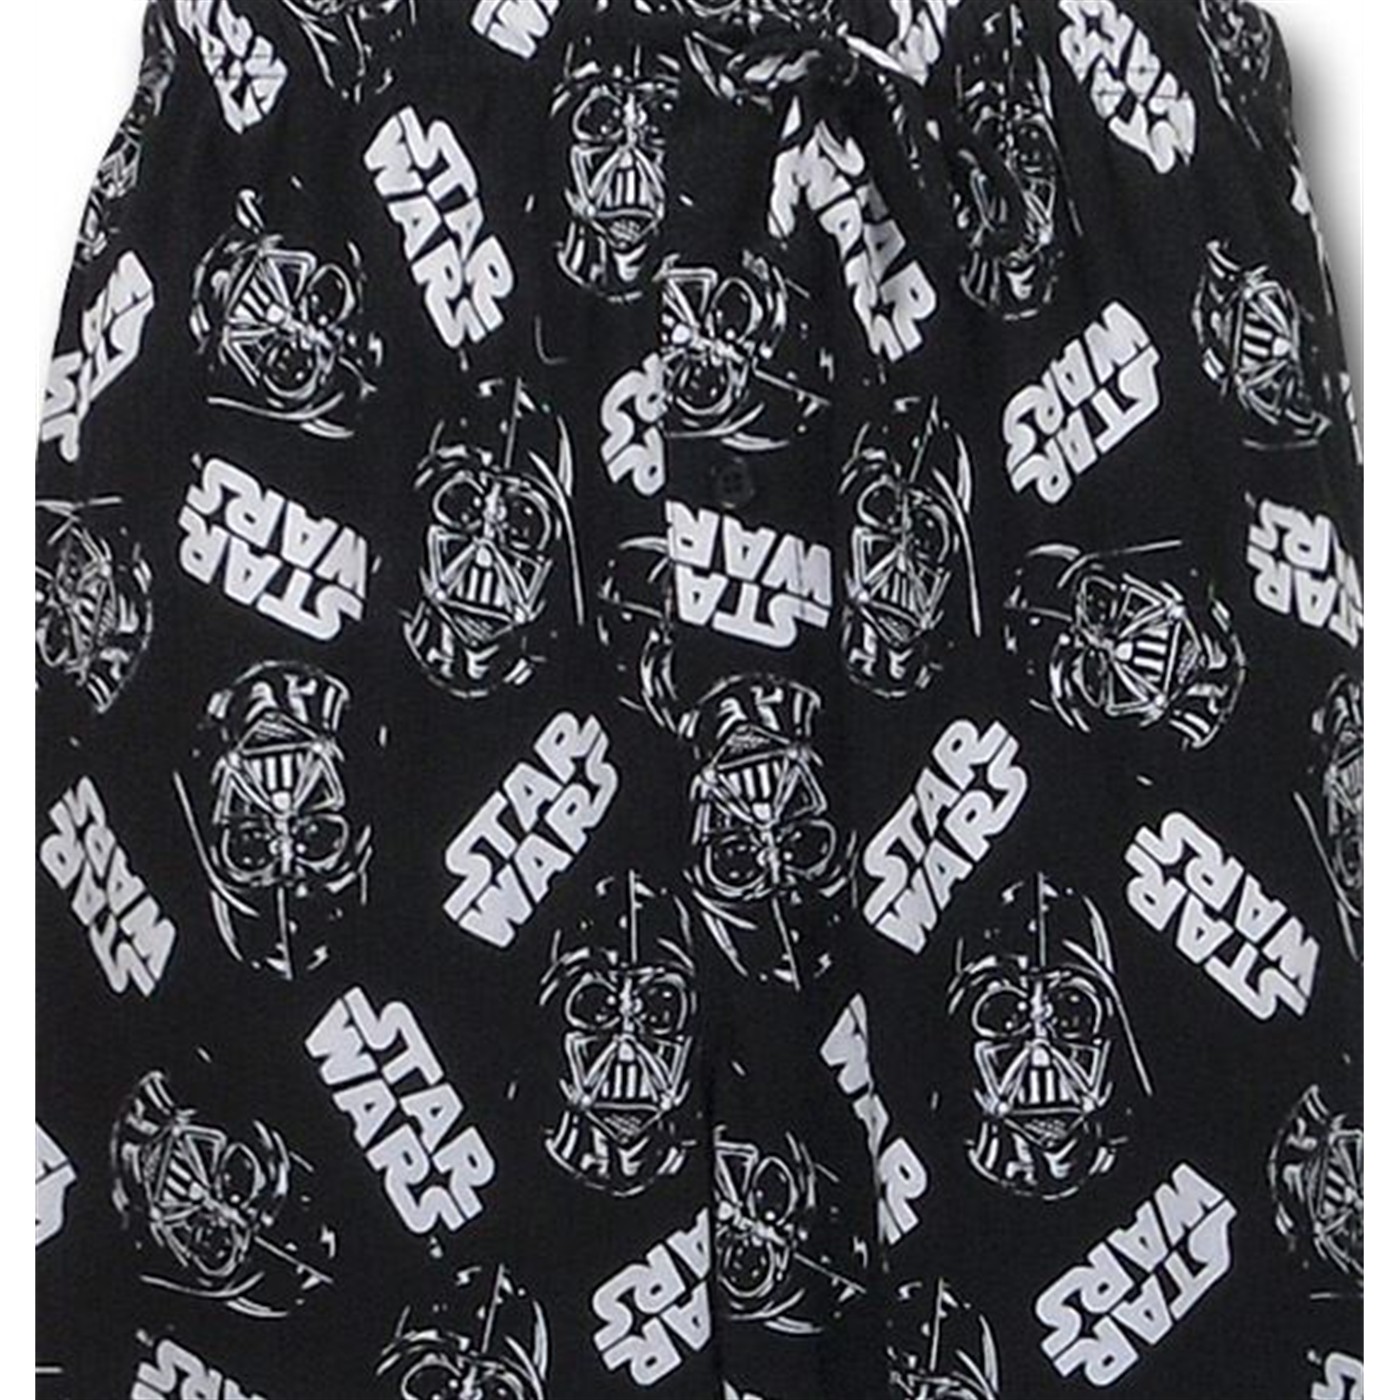 Star Wars Darth Vader Collage Lounge Pants